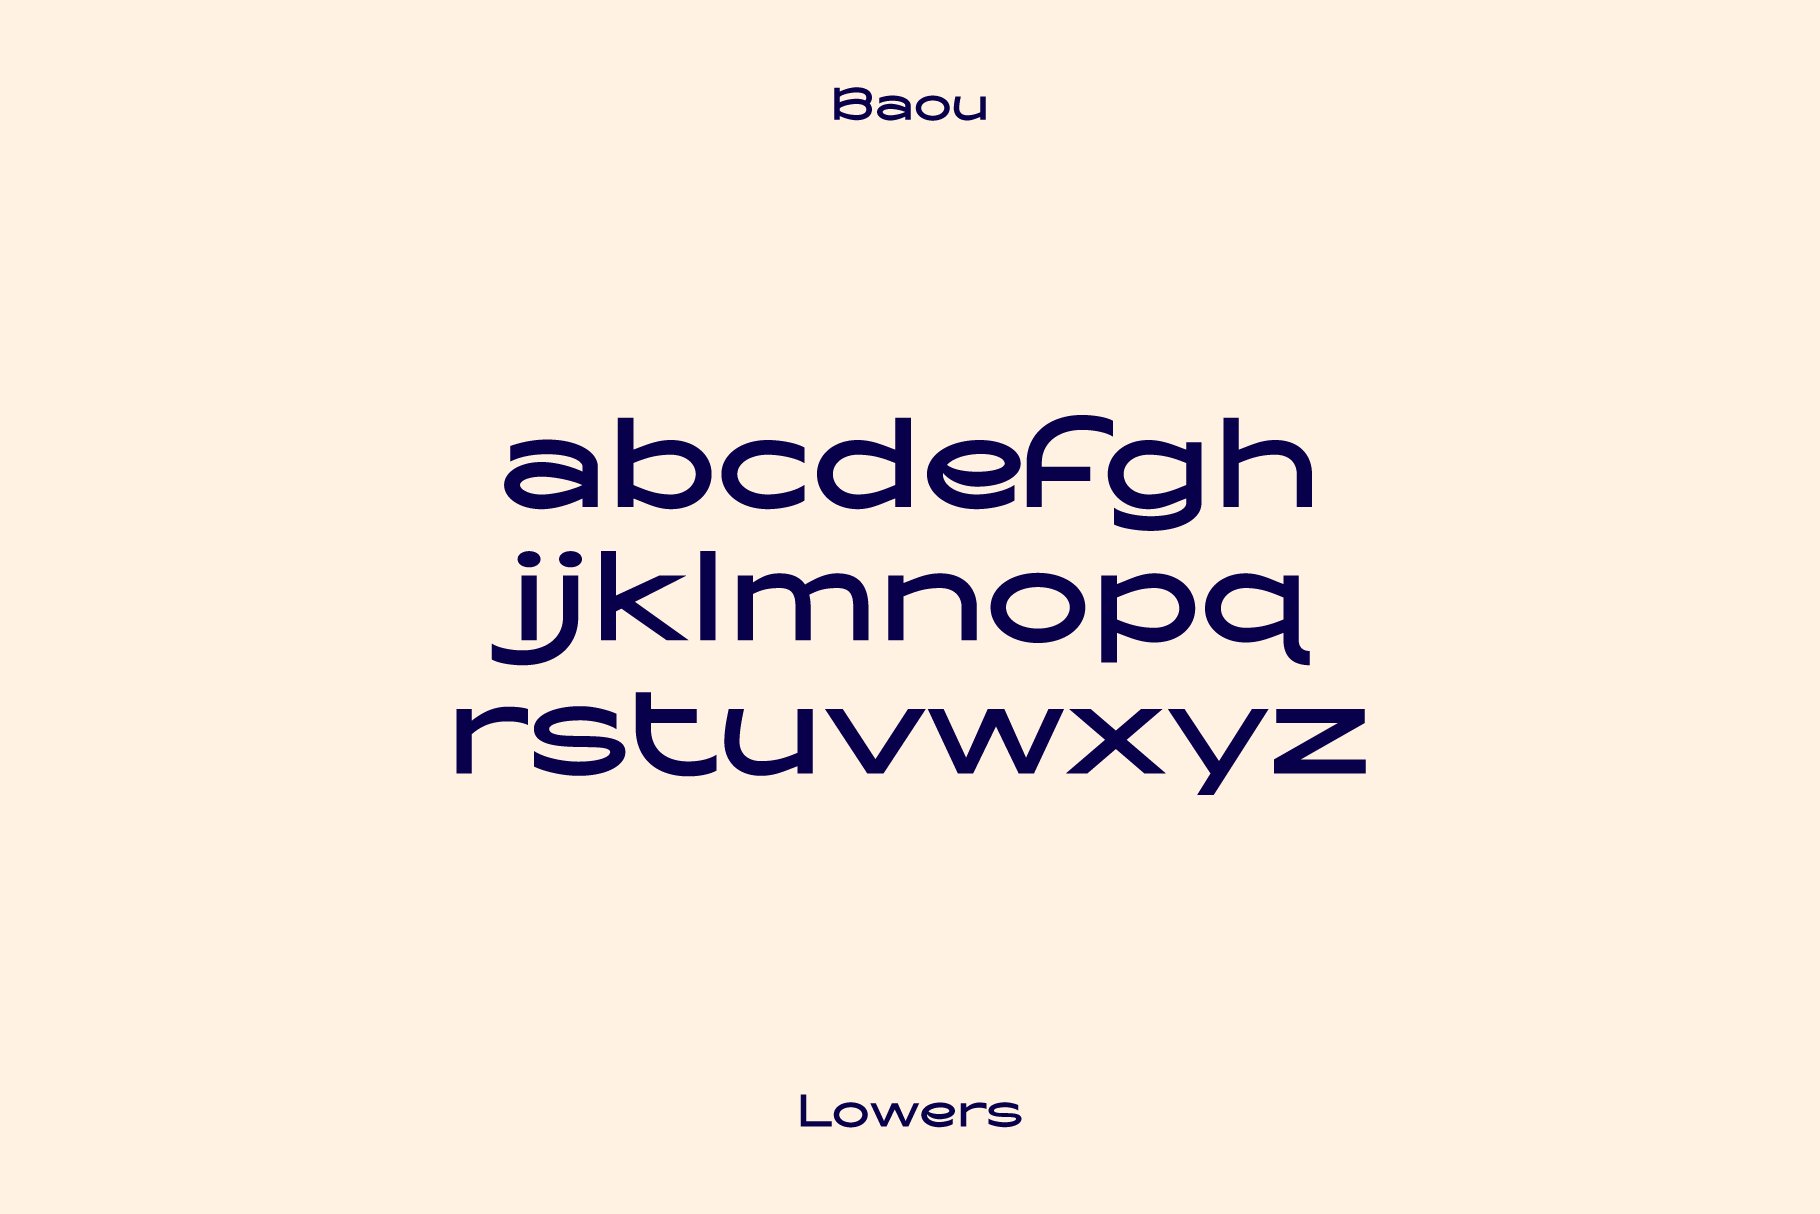 baou lowers 390